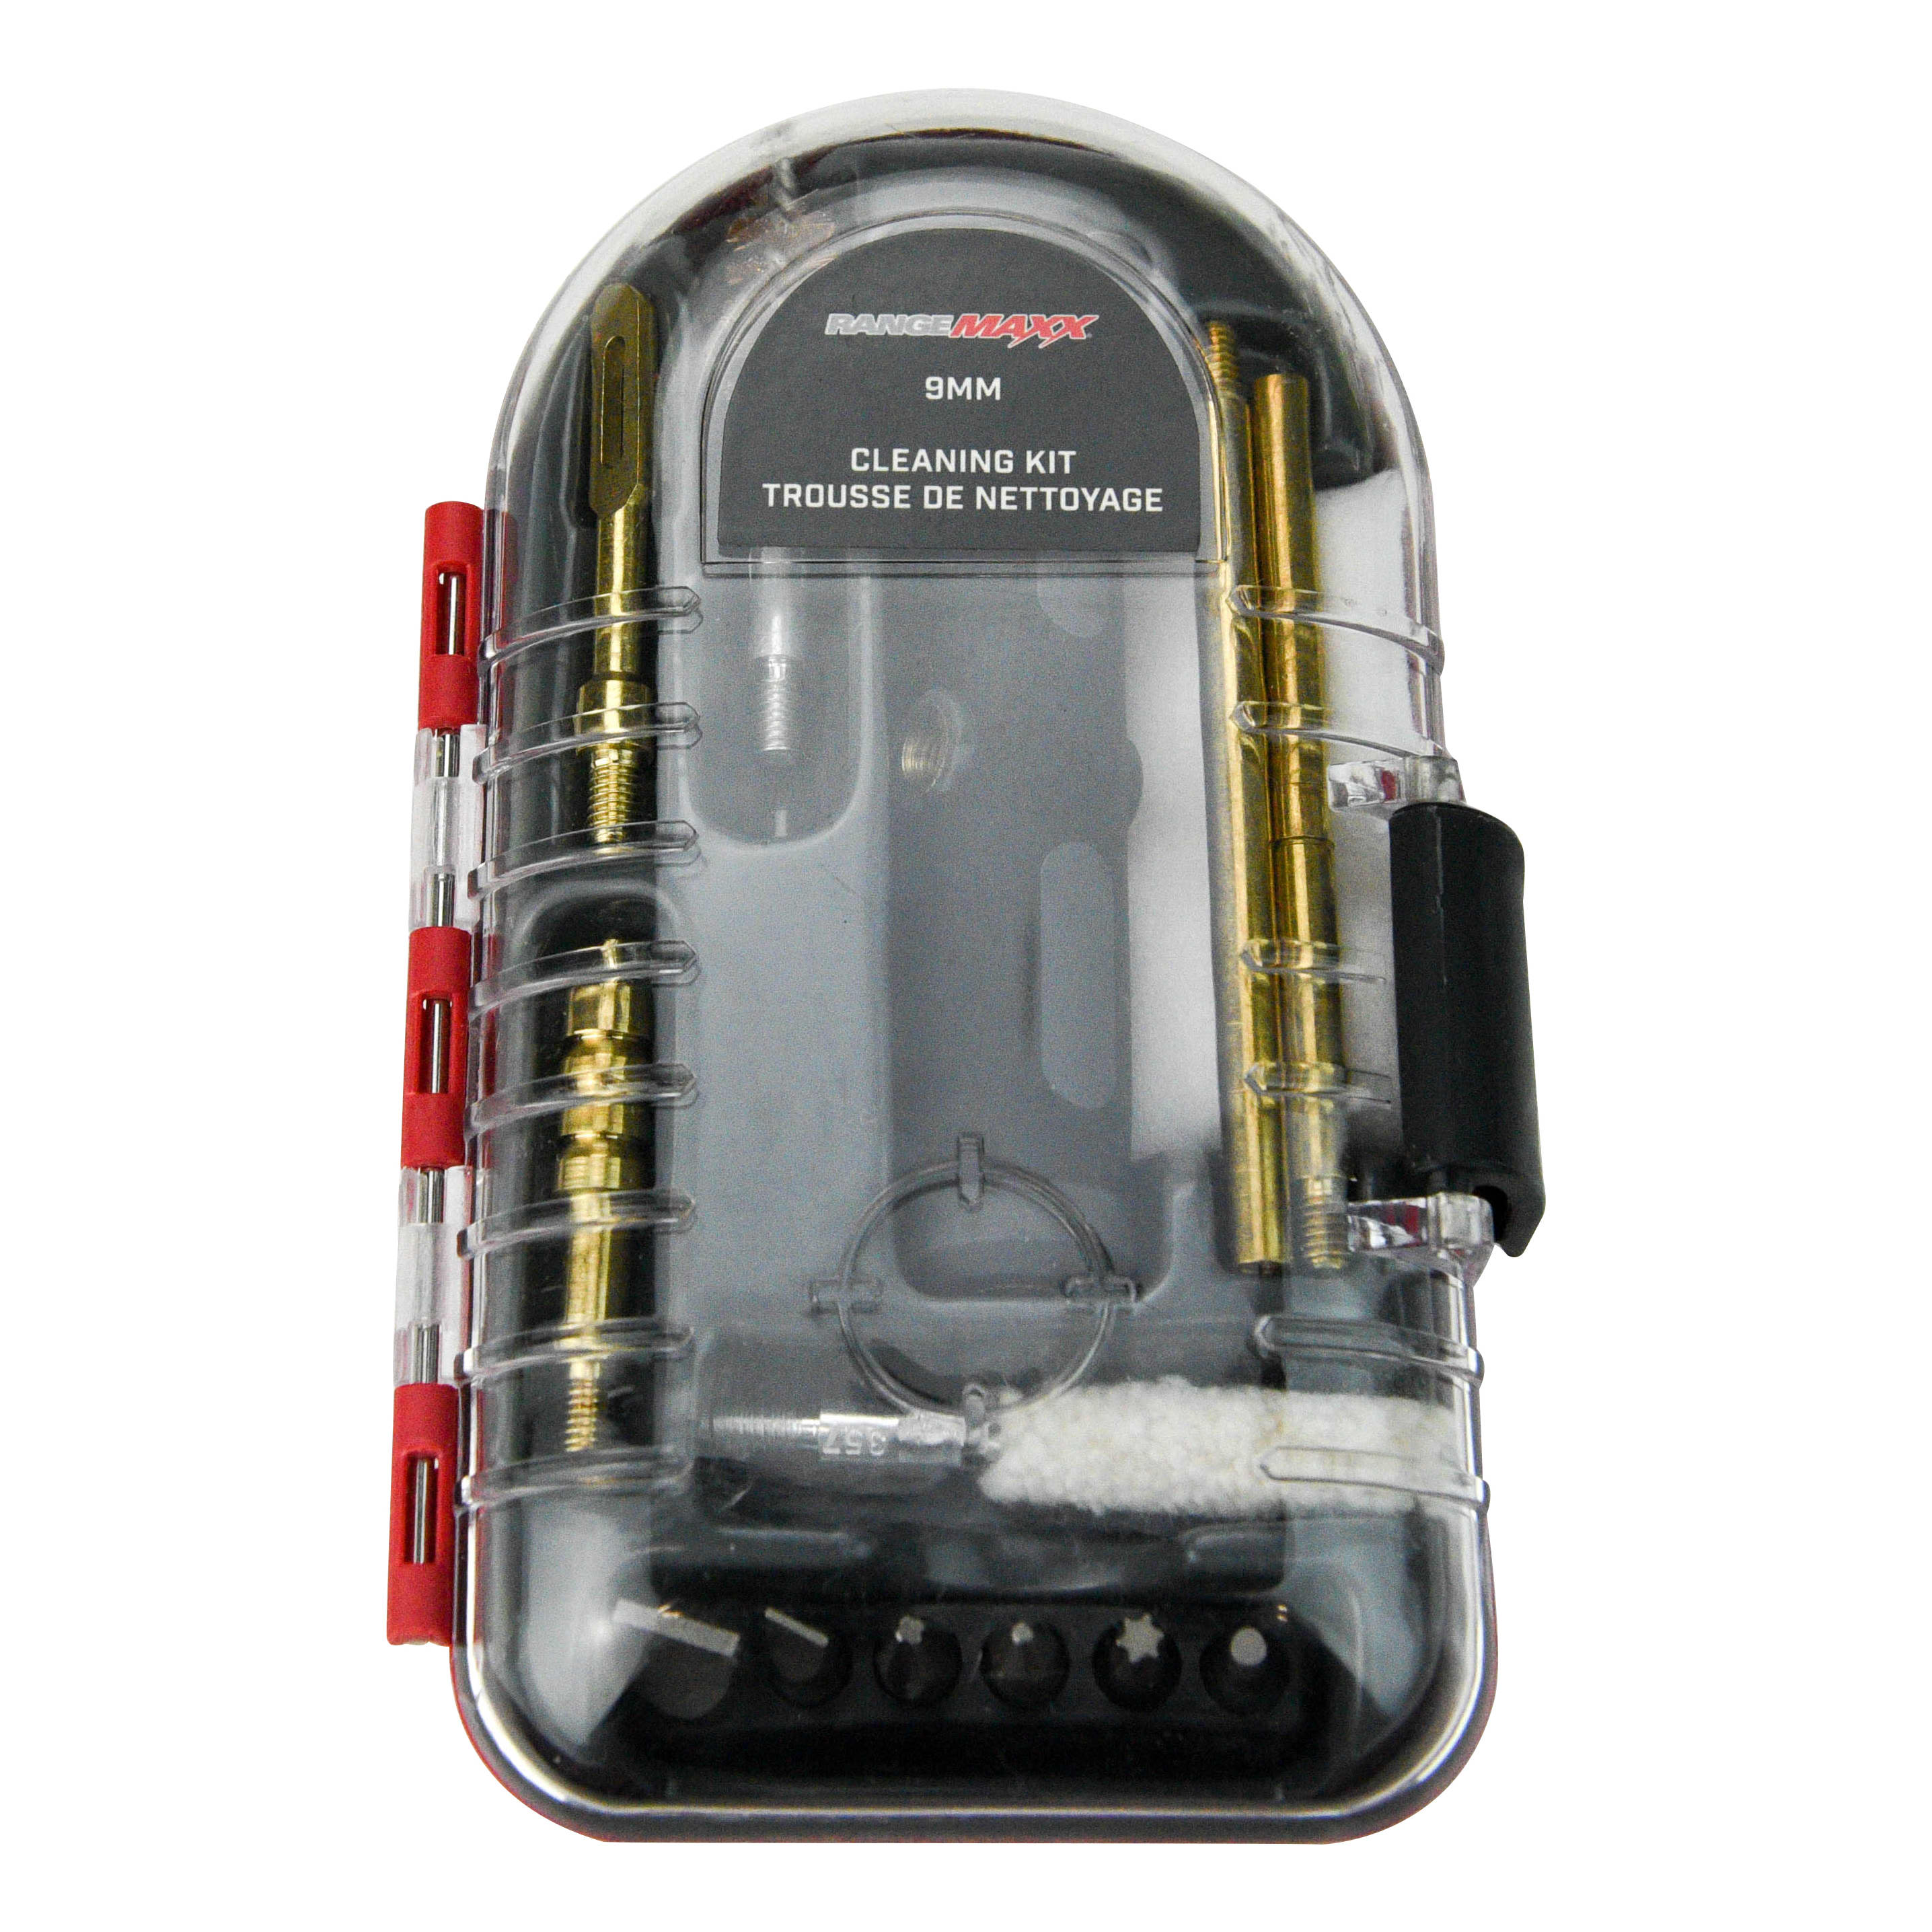 RangeMaxx® Cleaning Kit – 9mm - Closed View